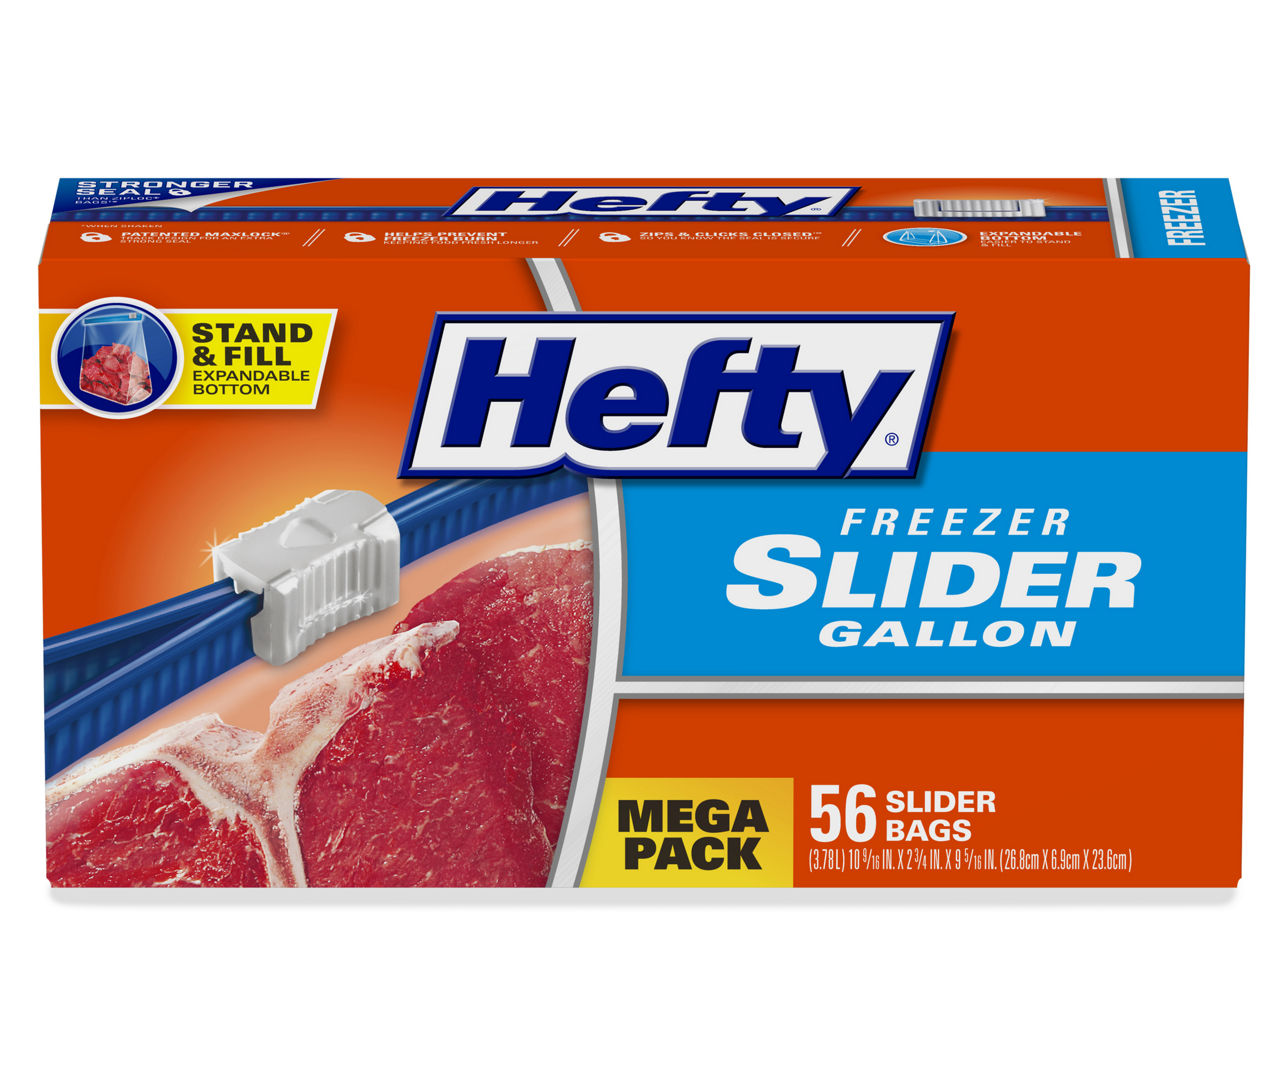 Hefty 1 Gal. Slider Freezer Bag Stand & Fill Expandable Bottom (10